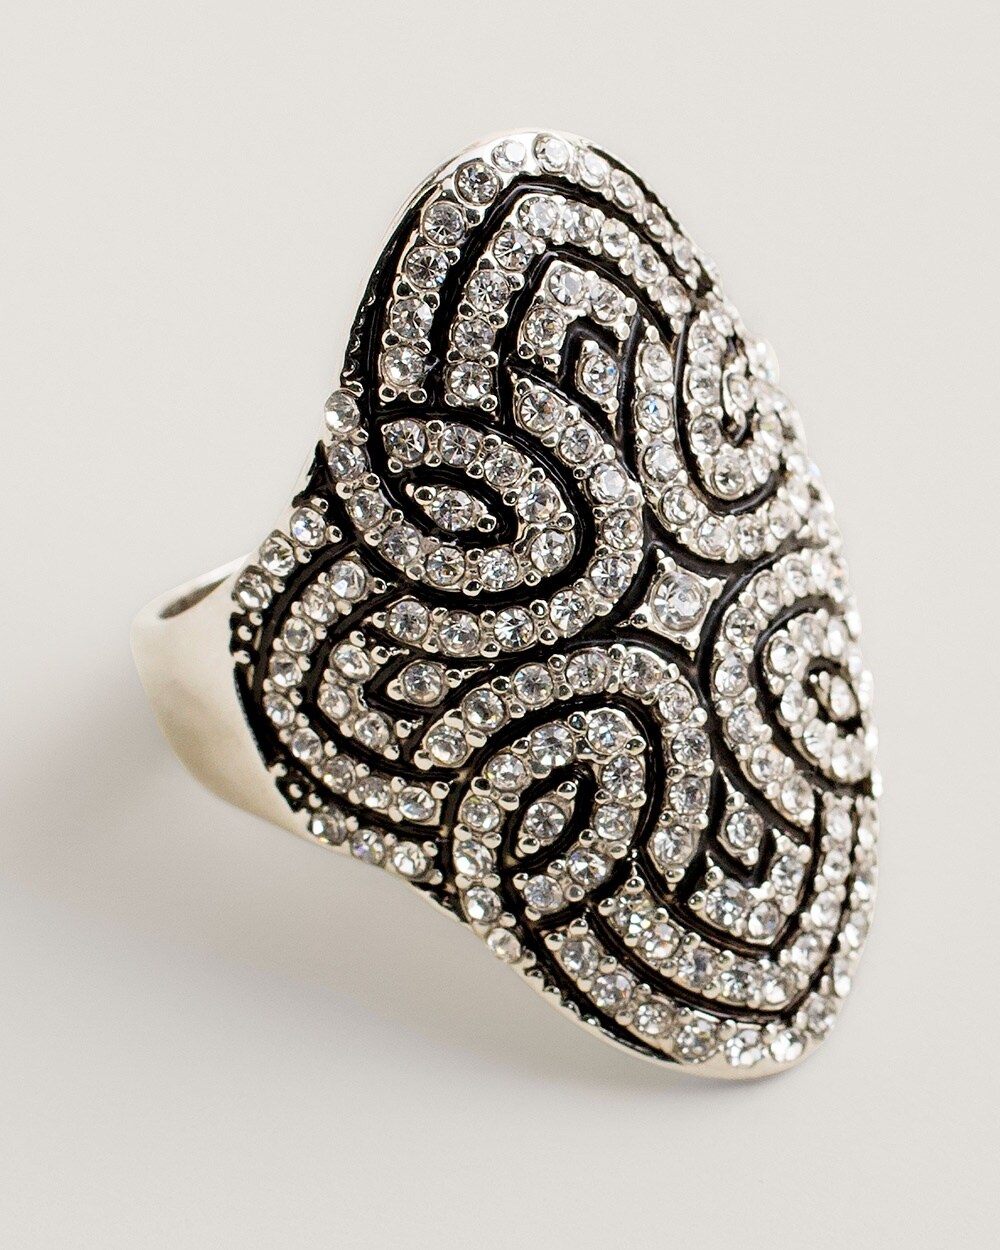 Festive Vintage-Inspired Silvertone Ring